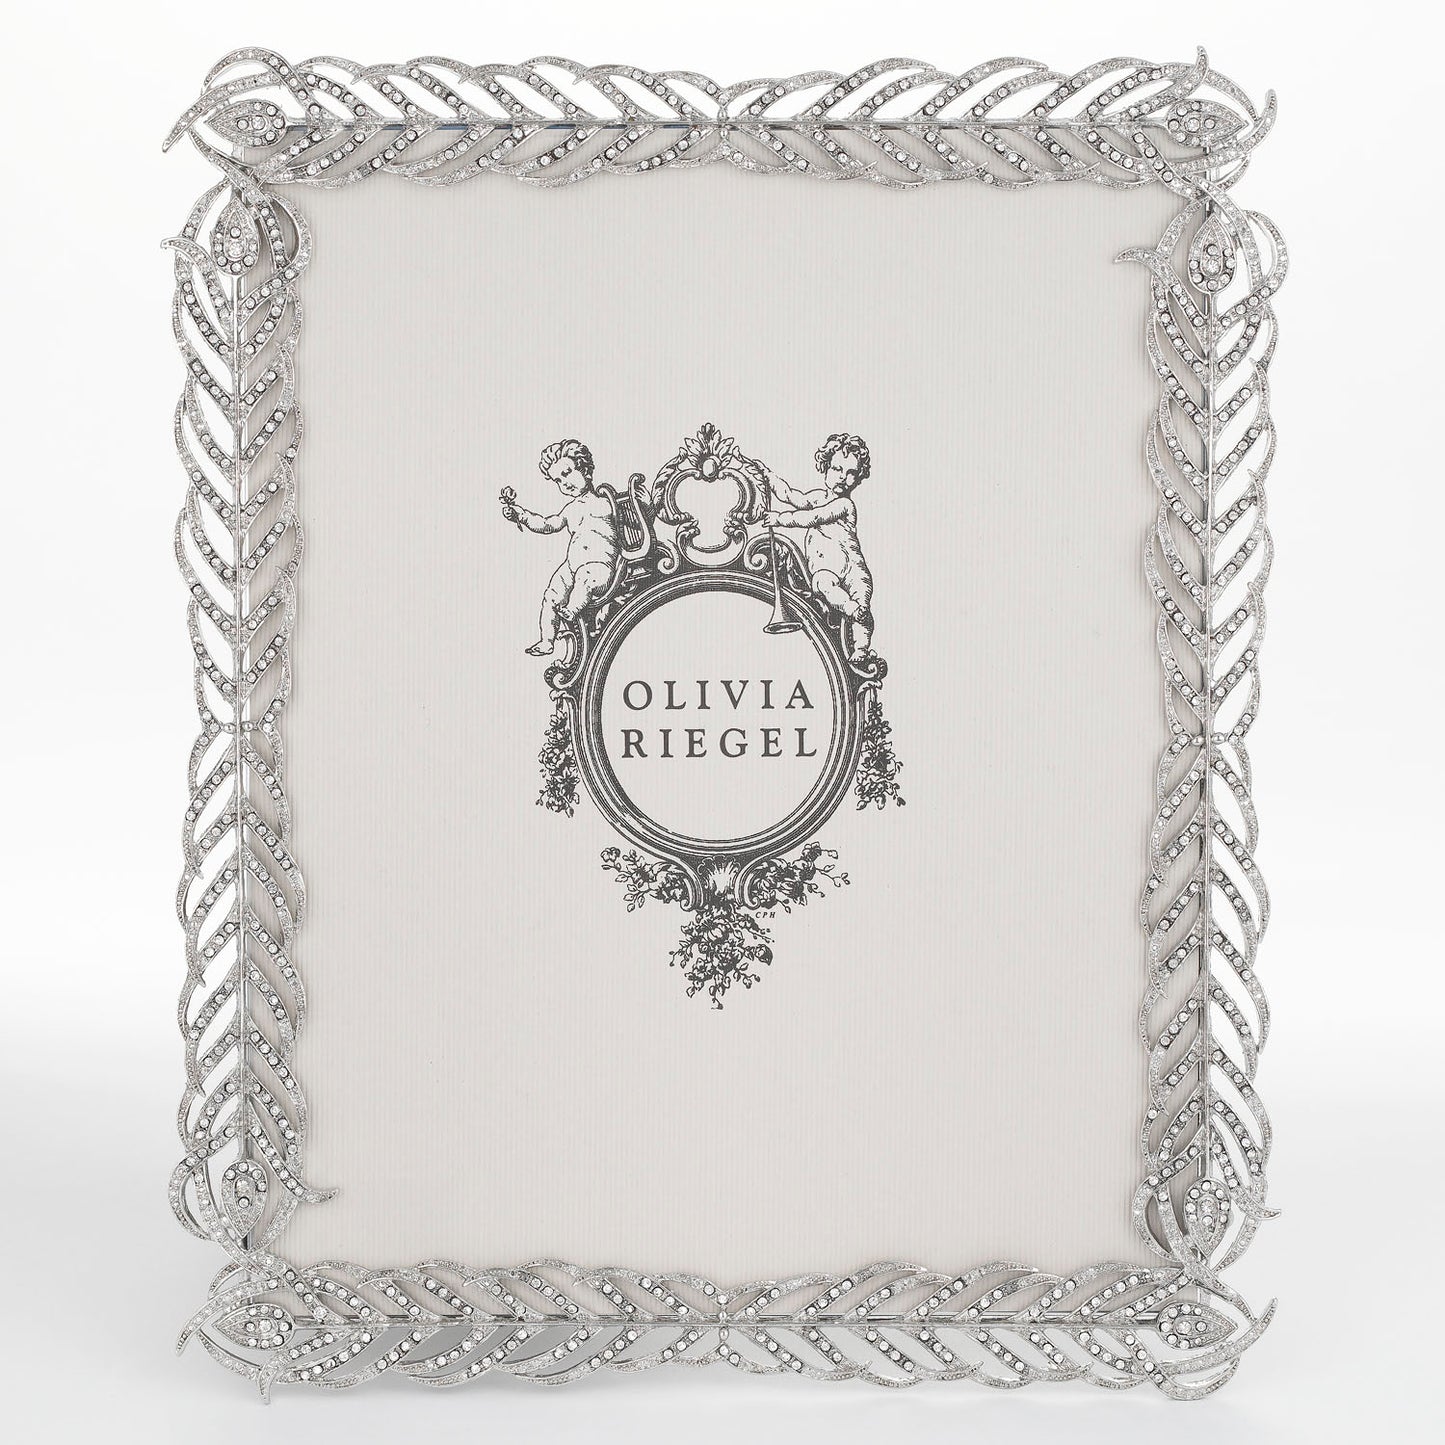 OLIVIA RIEGEL SILVER MORA 8" x 10" FRAME